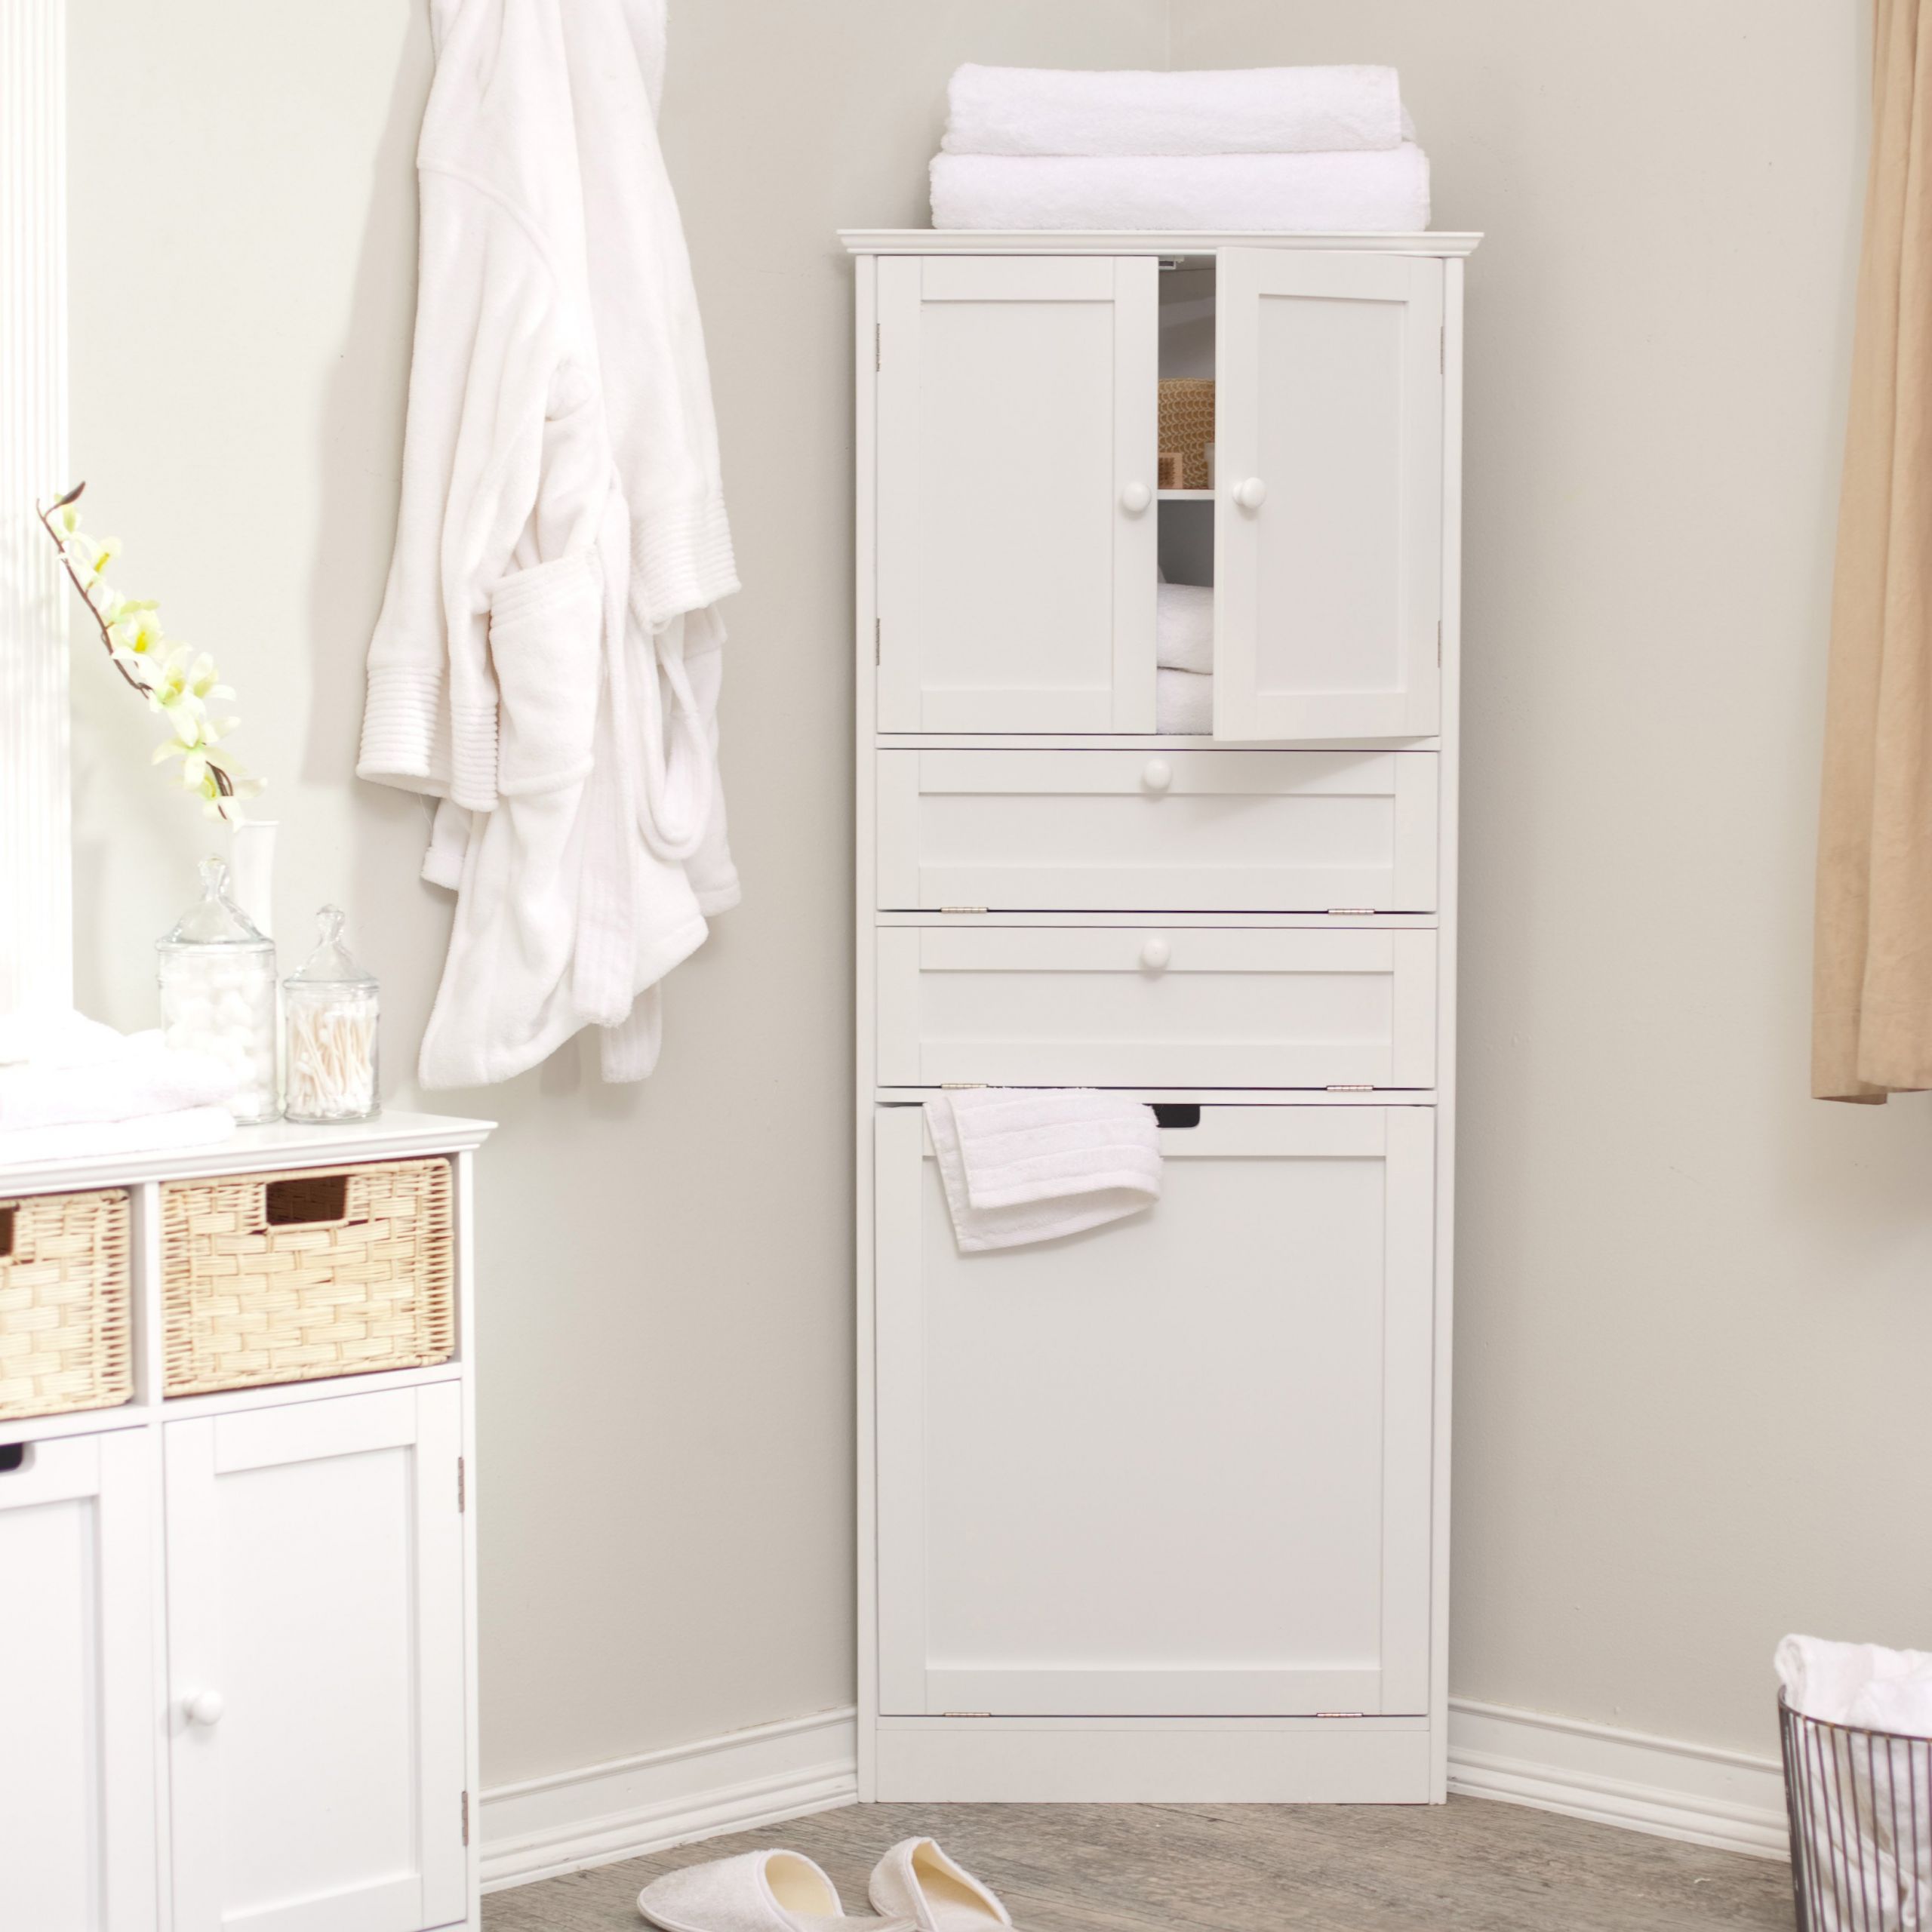 White Corner Bathroom Cabinet
 Space Efficient Corner Bathroom Cabinet for Your Small